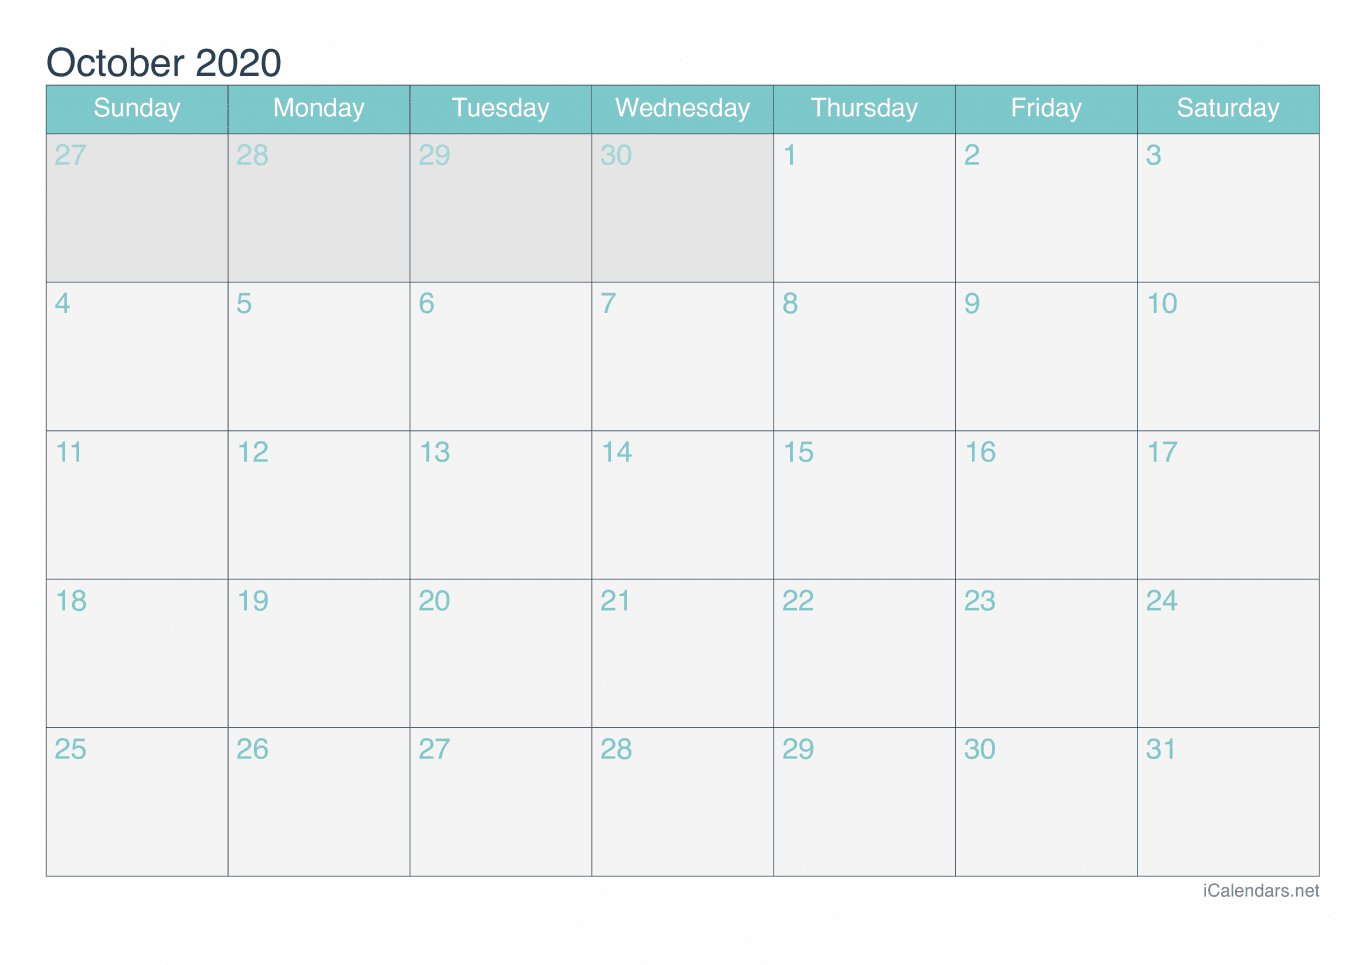 2020 October Calendar - Turquoise